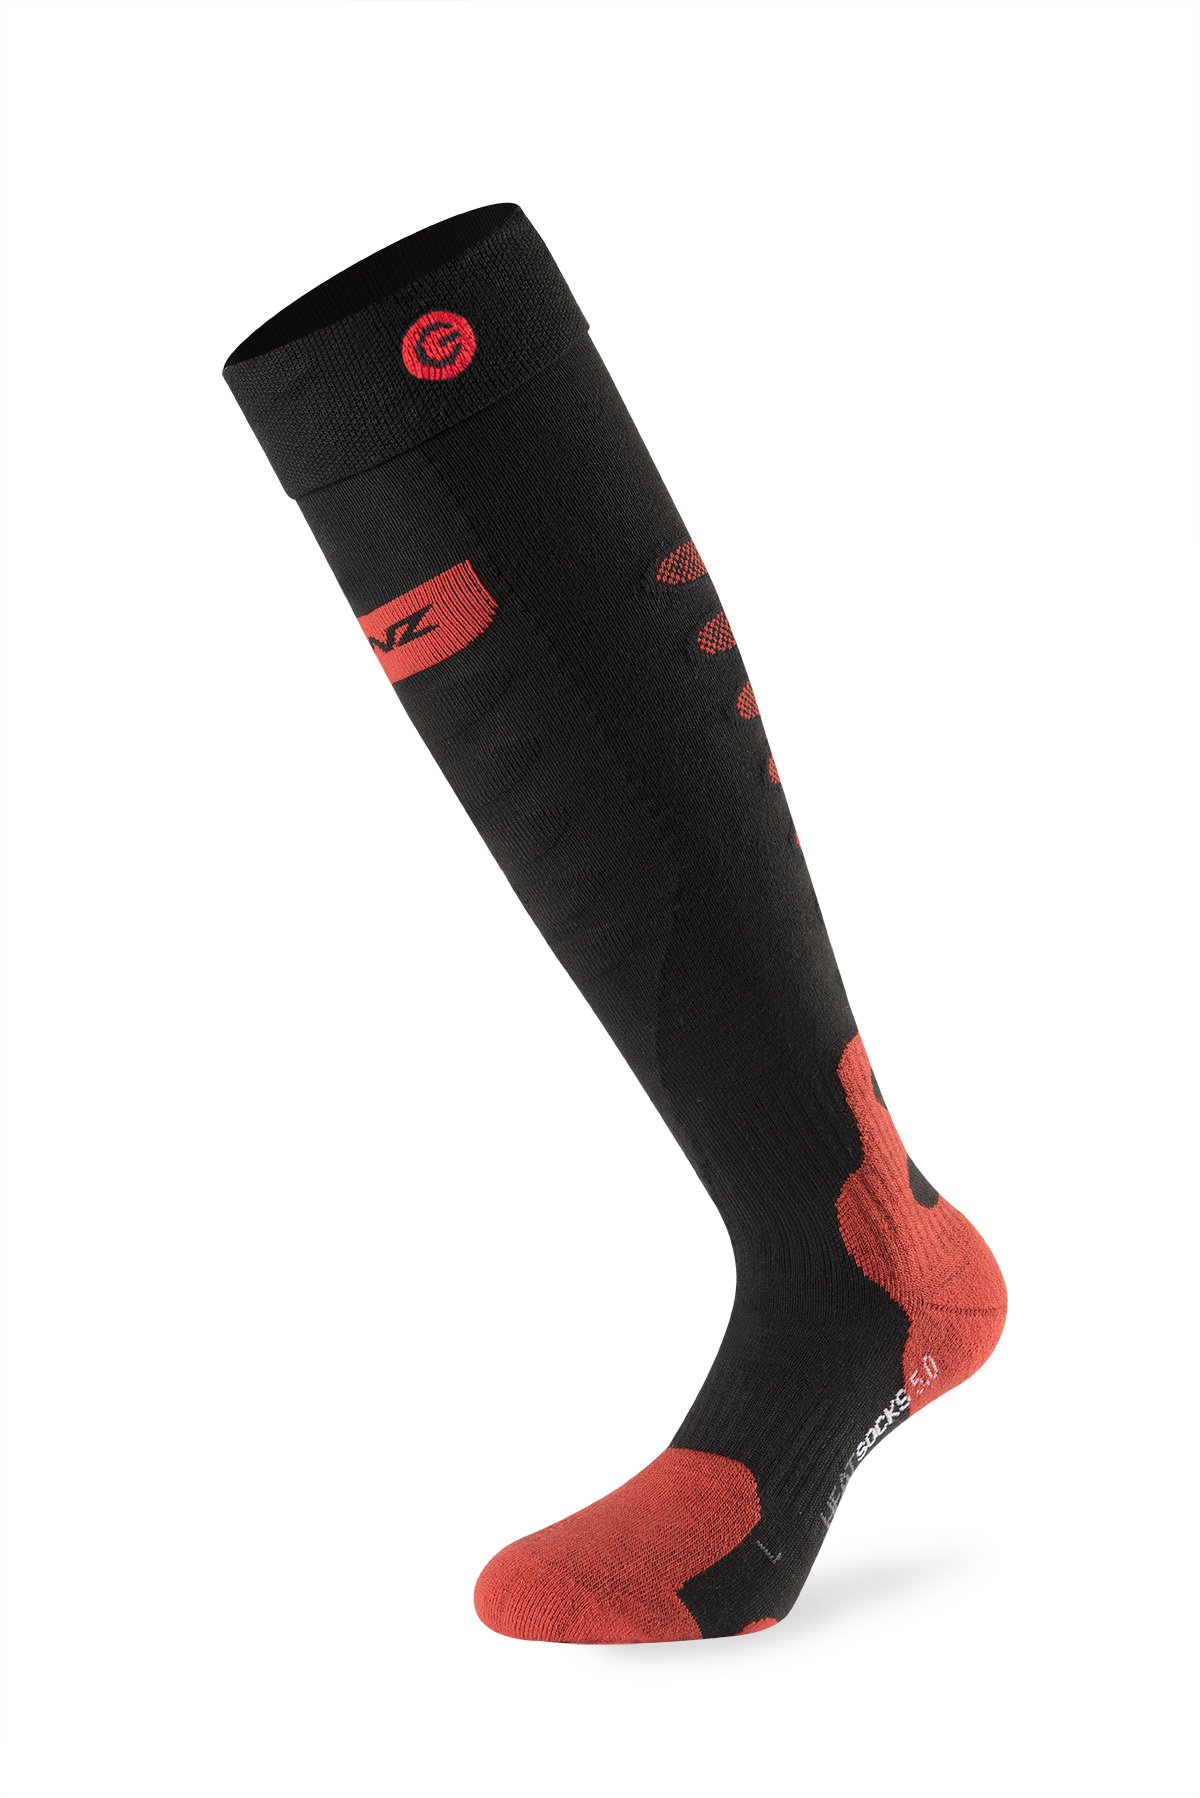 Vyhrievané ponožky Lenz Heat Socks 5.0 Toe Cap